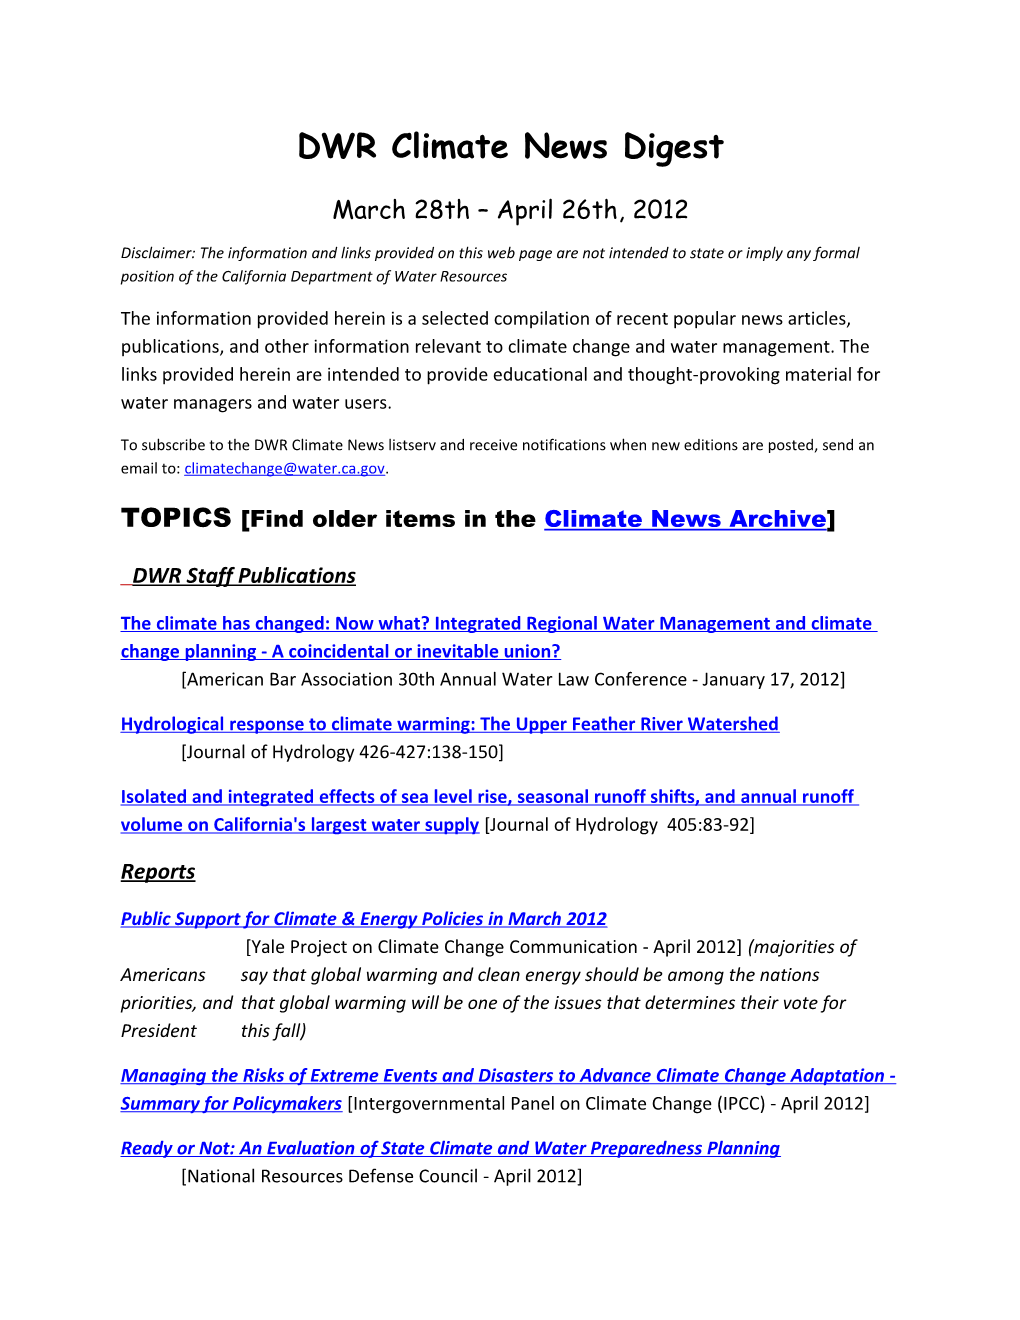 DWR Climate News Digest s2